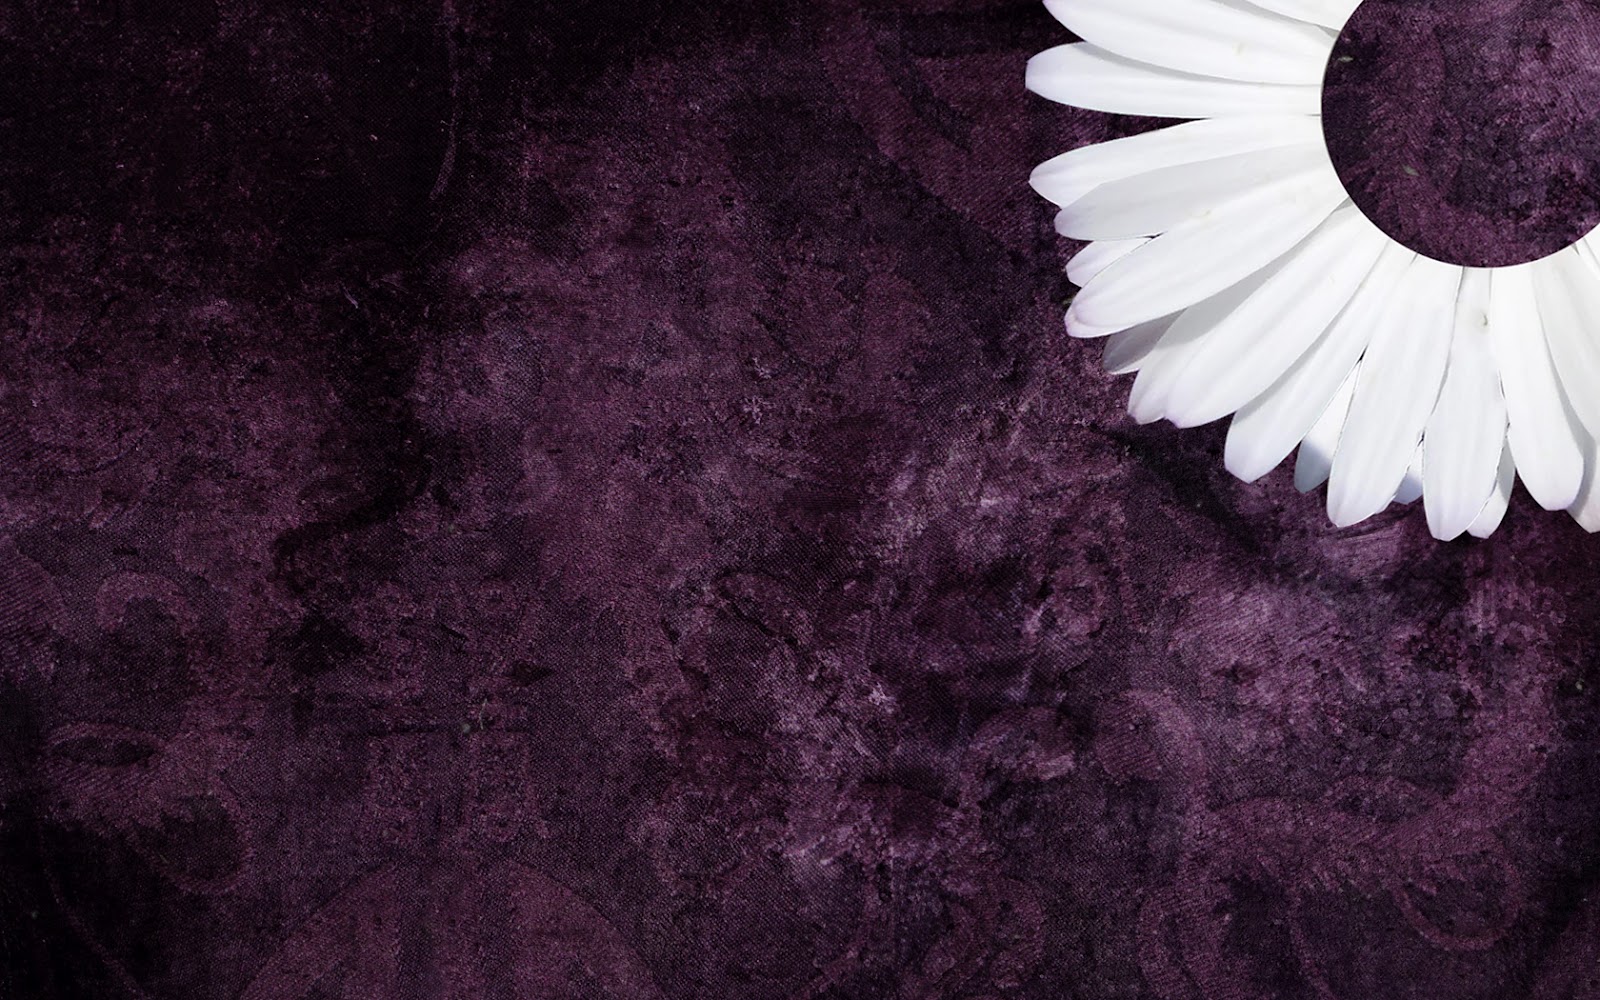  Purple Daisy Tumblr Backgrounds   ibjennyjenny Photography and 1600x1000